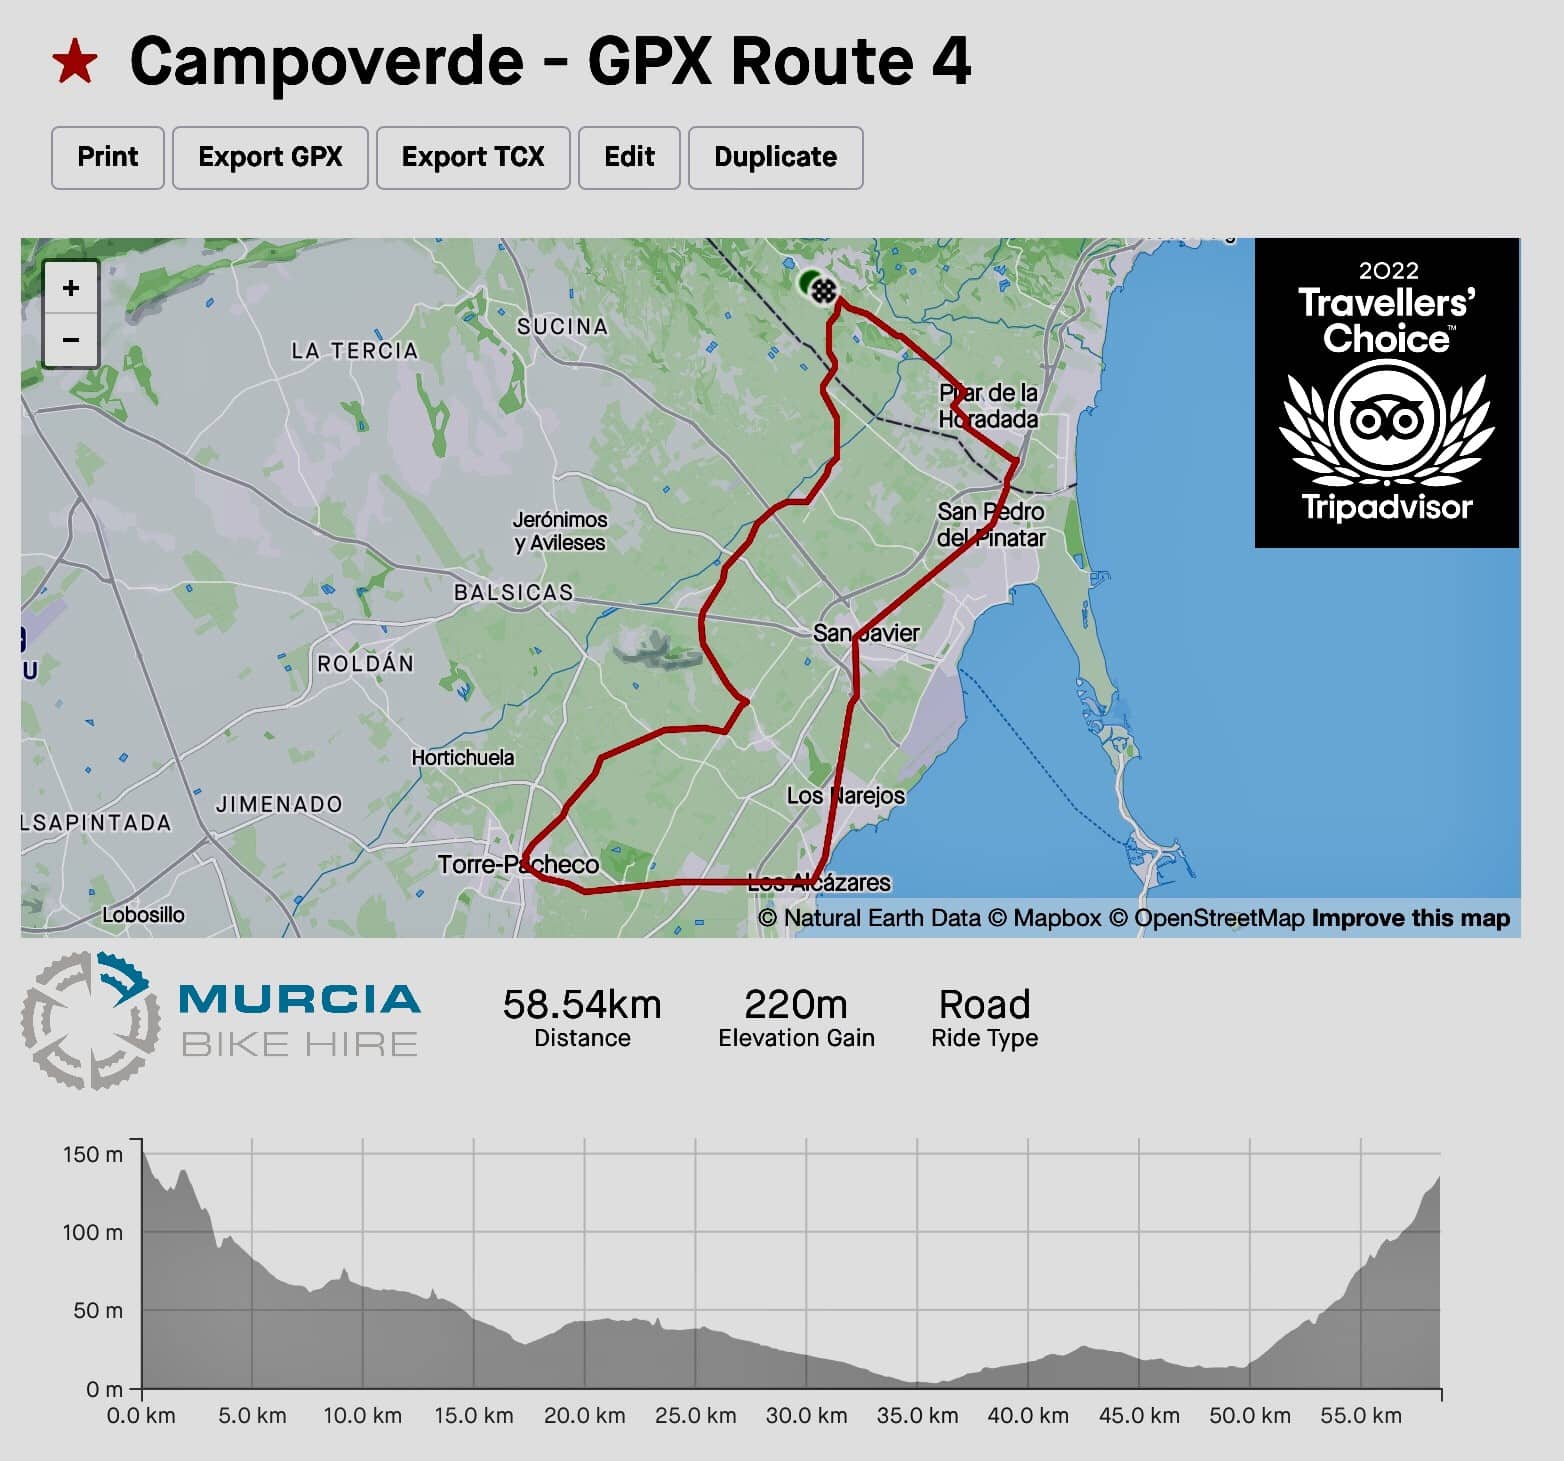 Campoverde - GPX Route 4